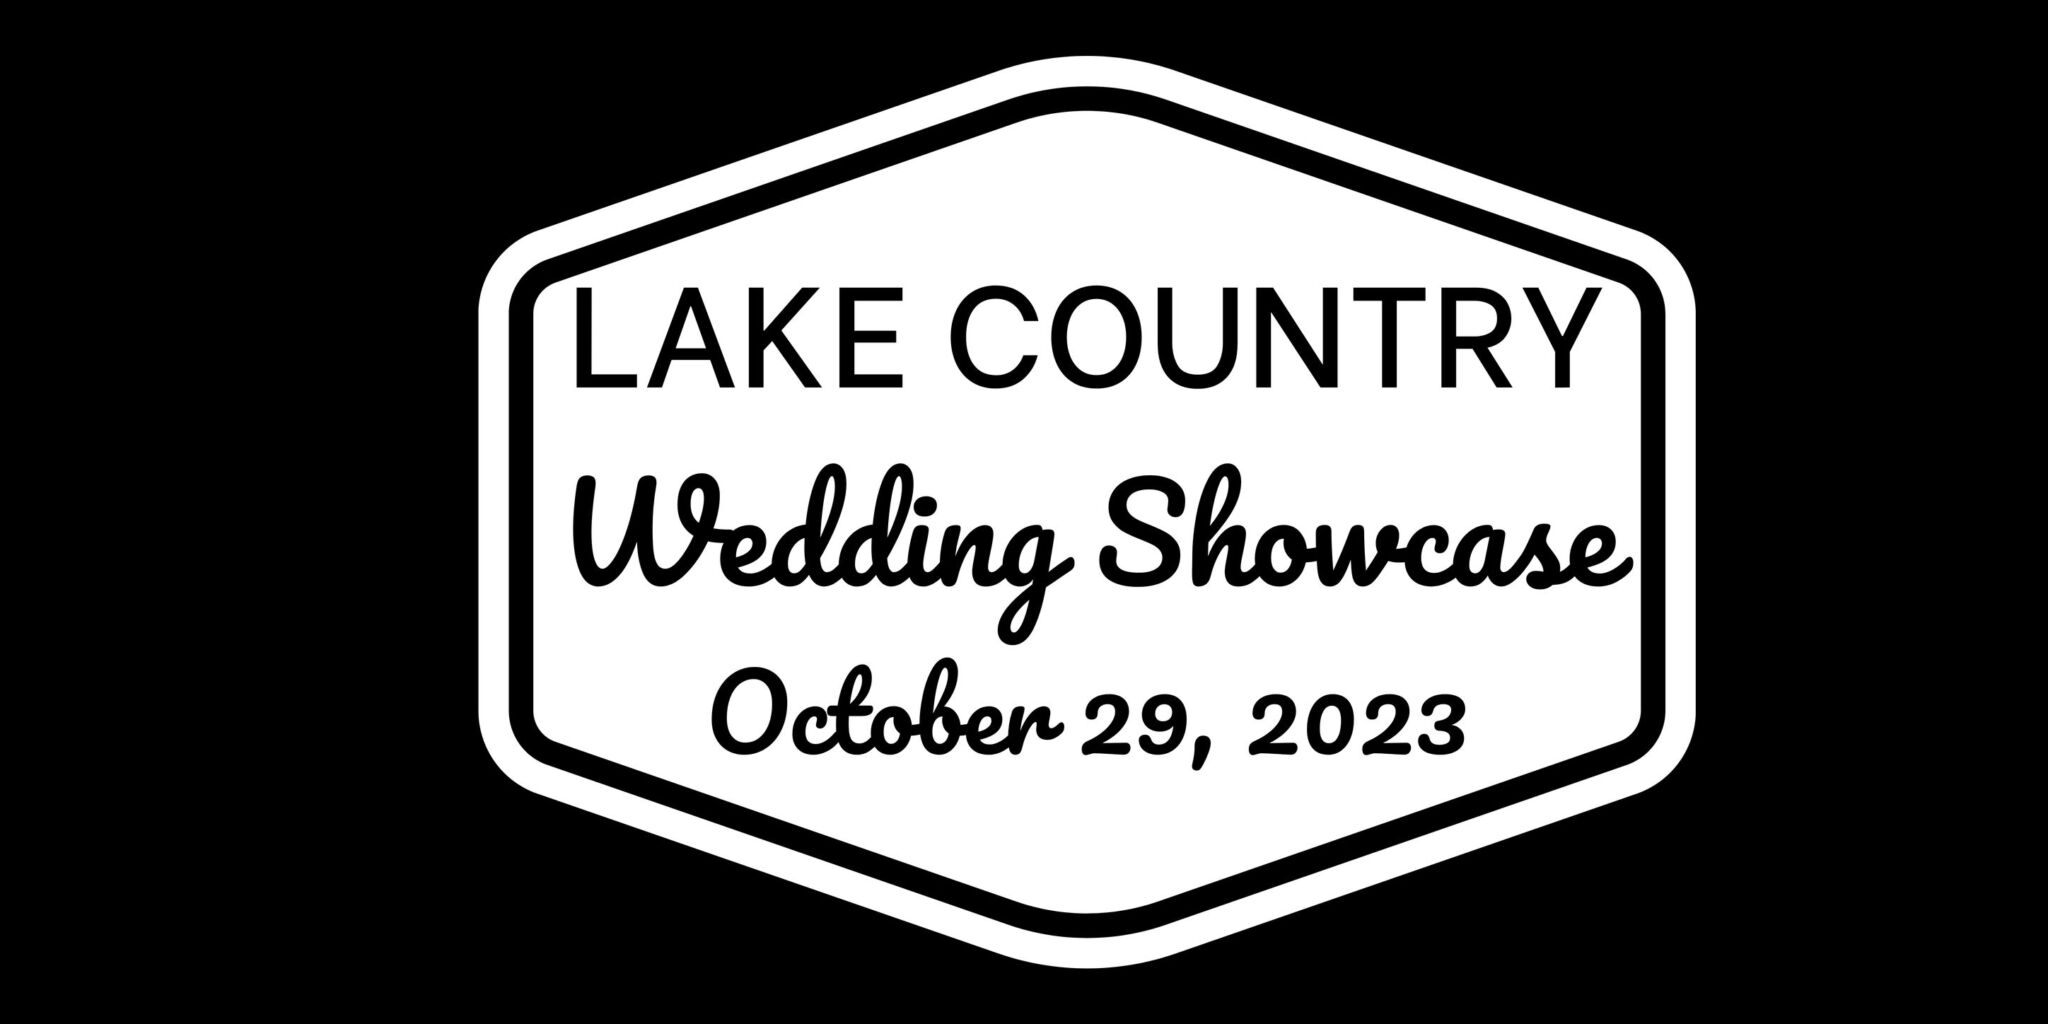 Lake Country Wedding Showcase